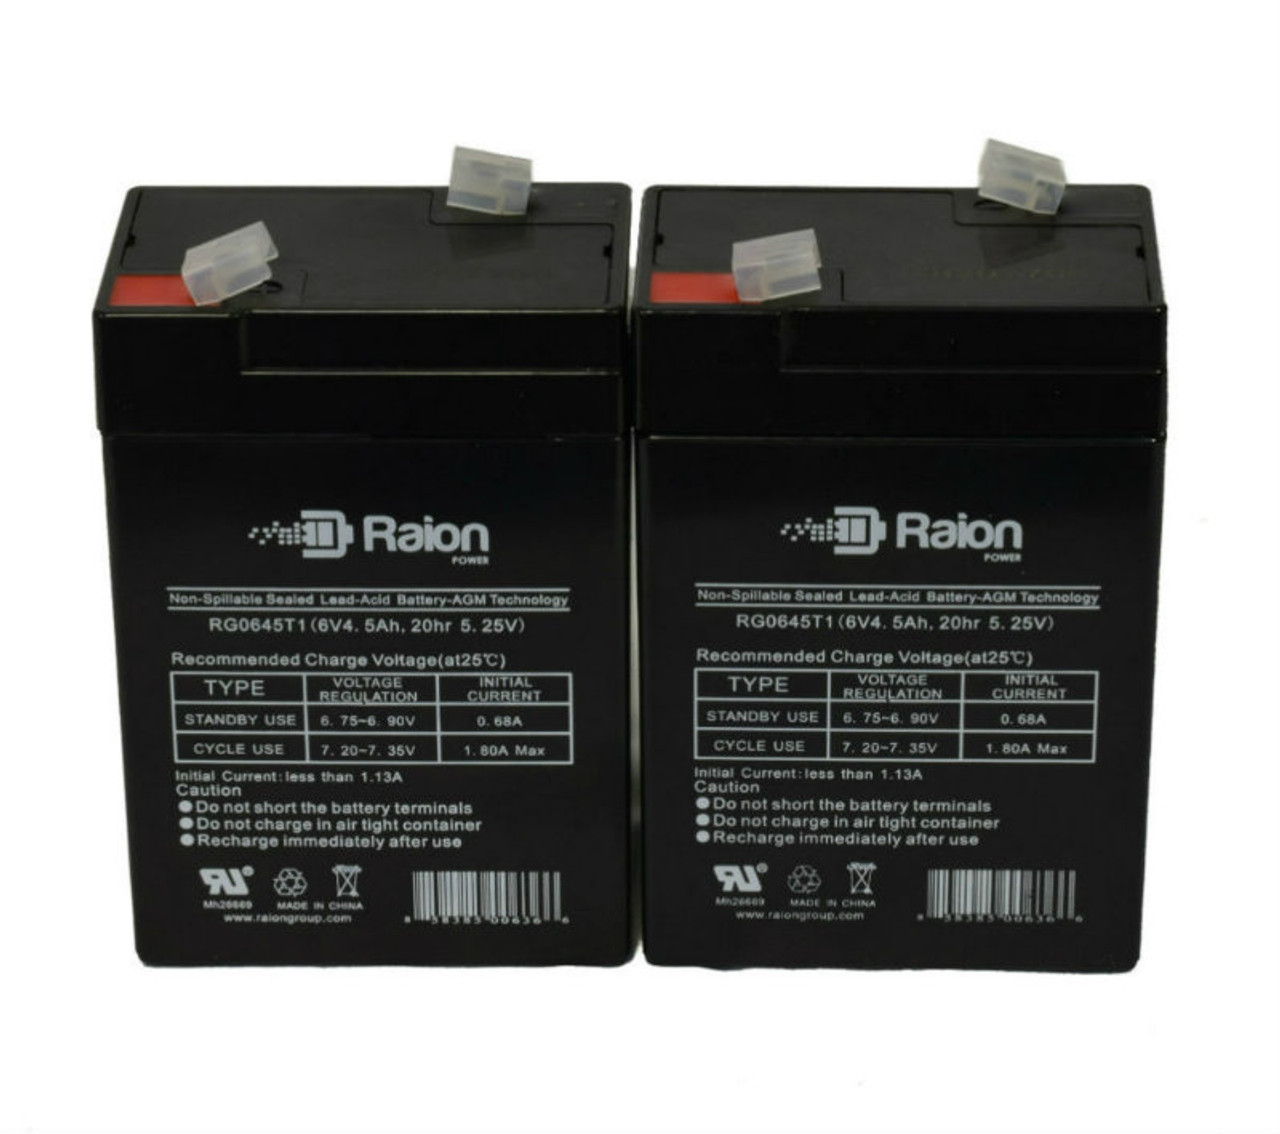 Raion Power 6V 4.5Ah Replacement Emergency Light Battery for Sanshui JL3-XM-4 - 2 Pack